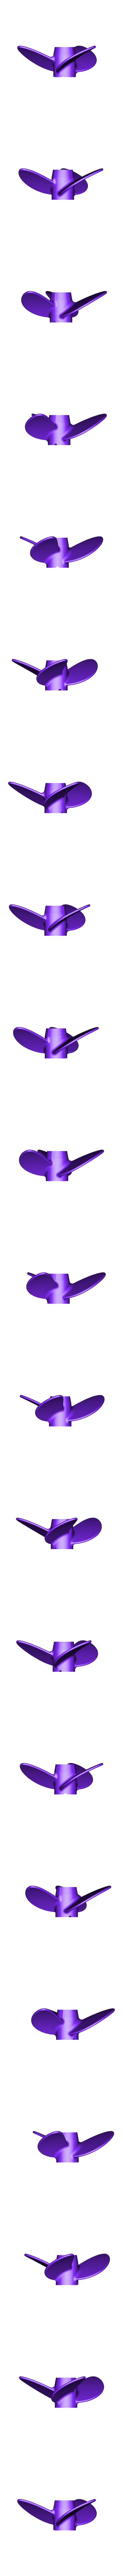 helice giro derecho.stl Download free STL file nautical propeller right sense • 3D printable object, gabrielrf